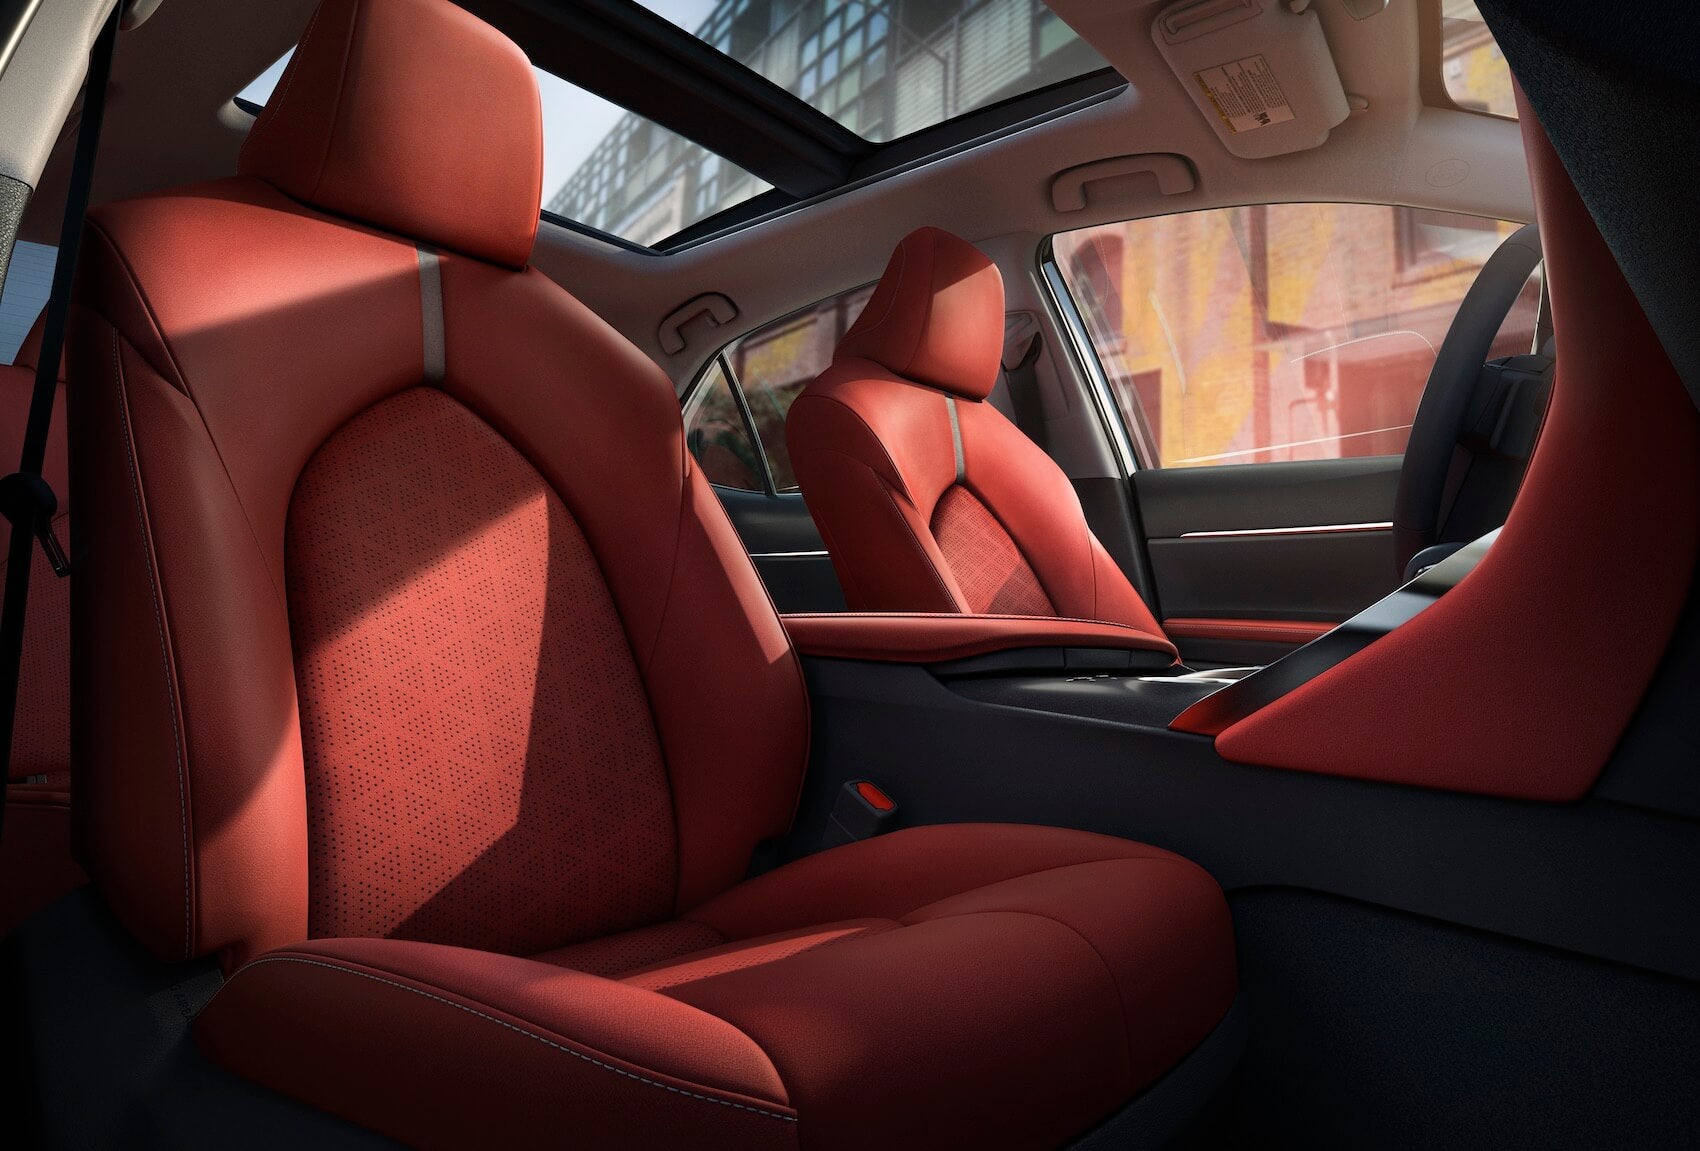 Toyota Camry Interior Seating Comfort